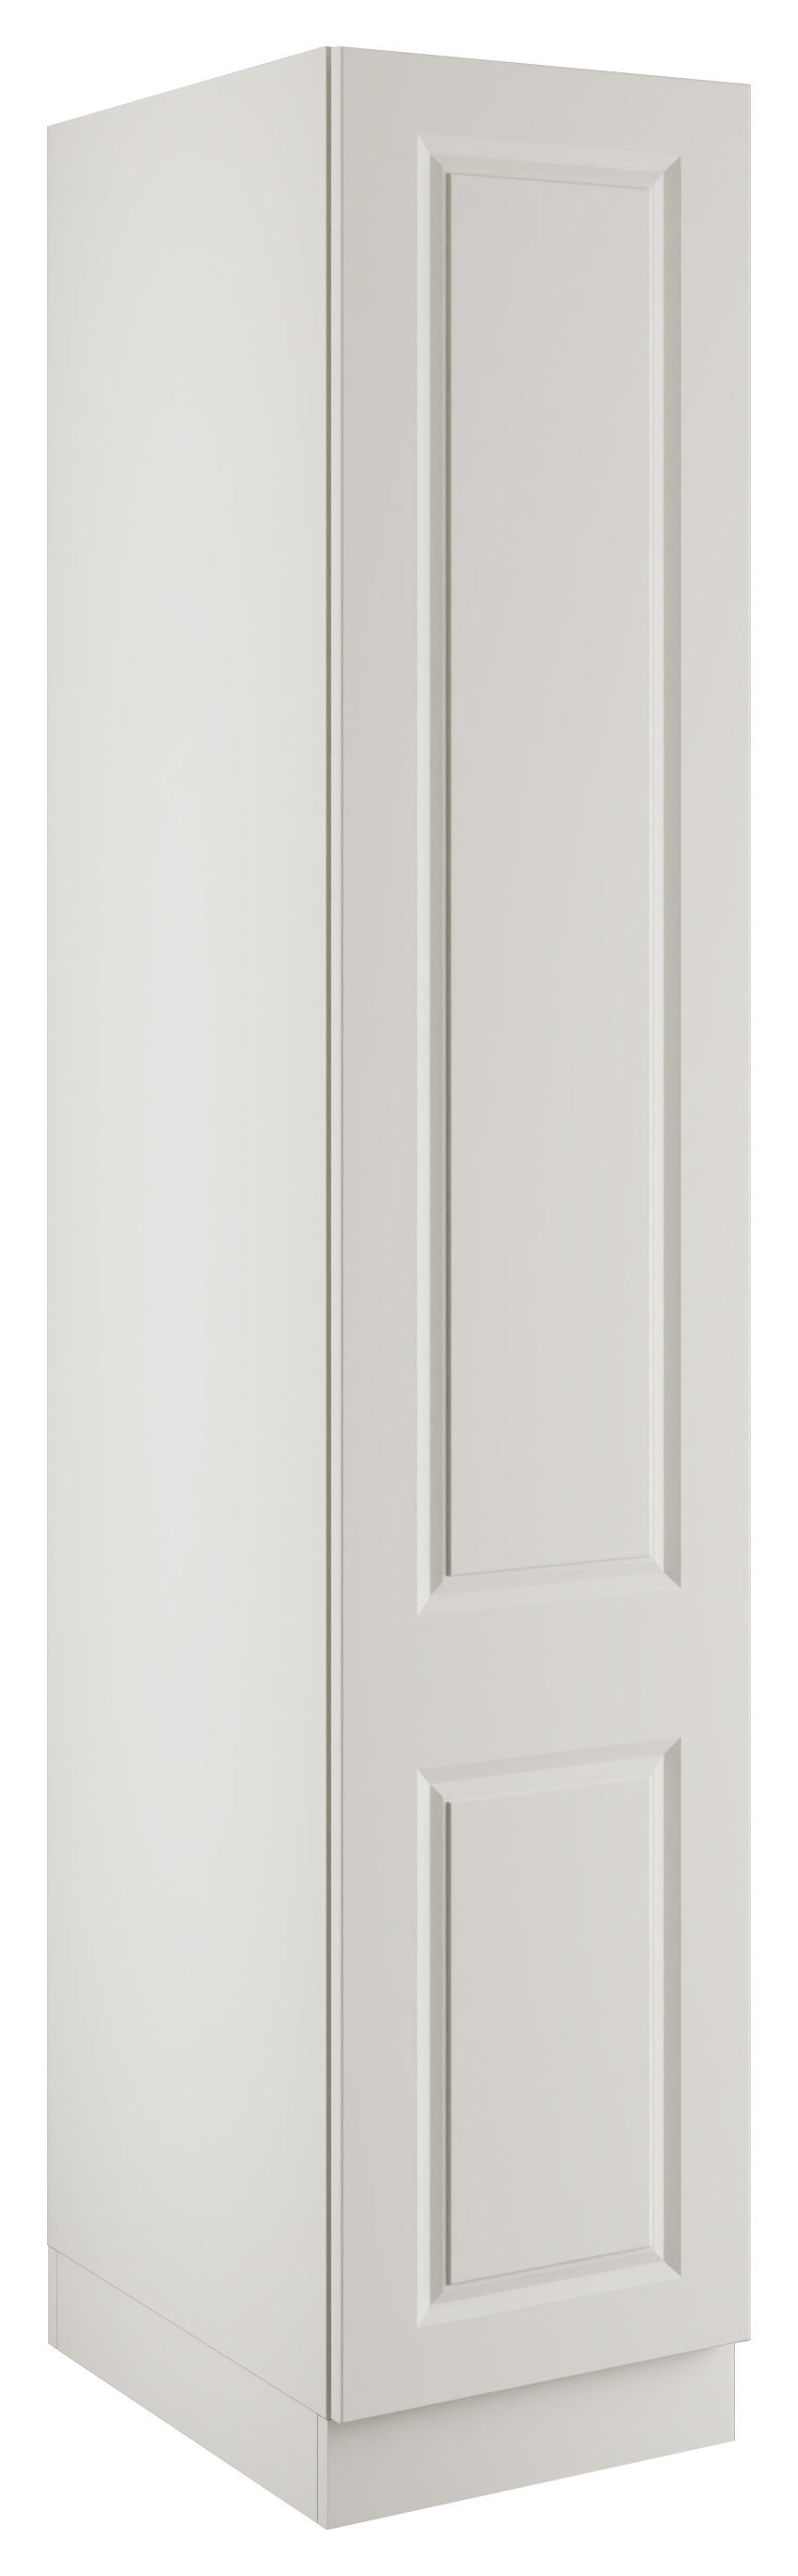 Harrogate White Single Wardrobe with Double Rail - 450 x 2260 x 608mm